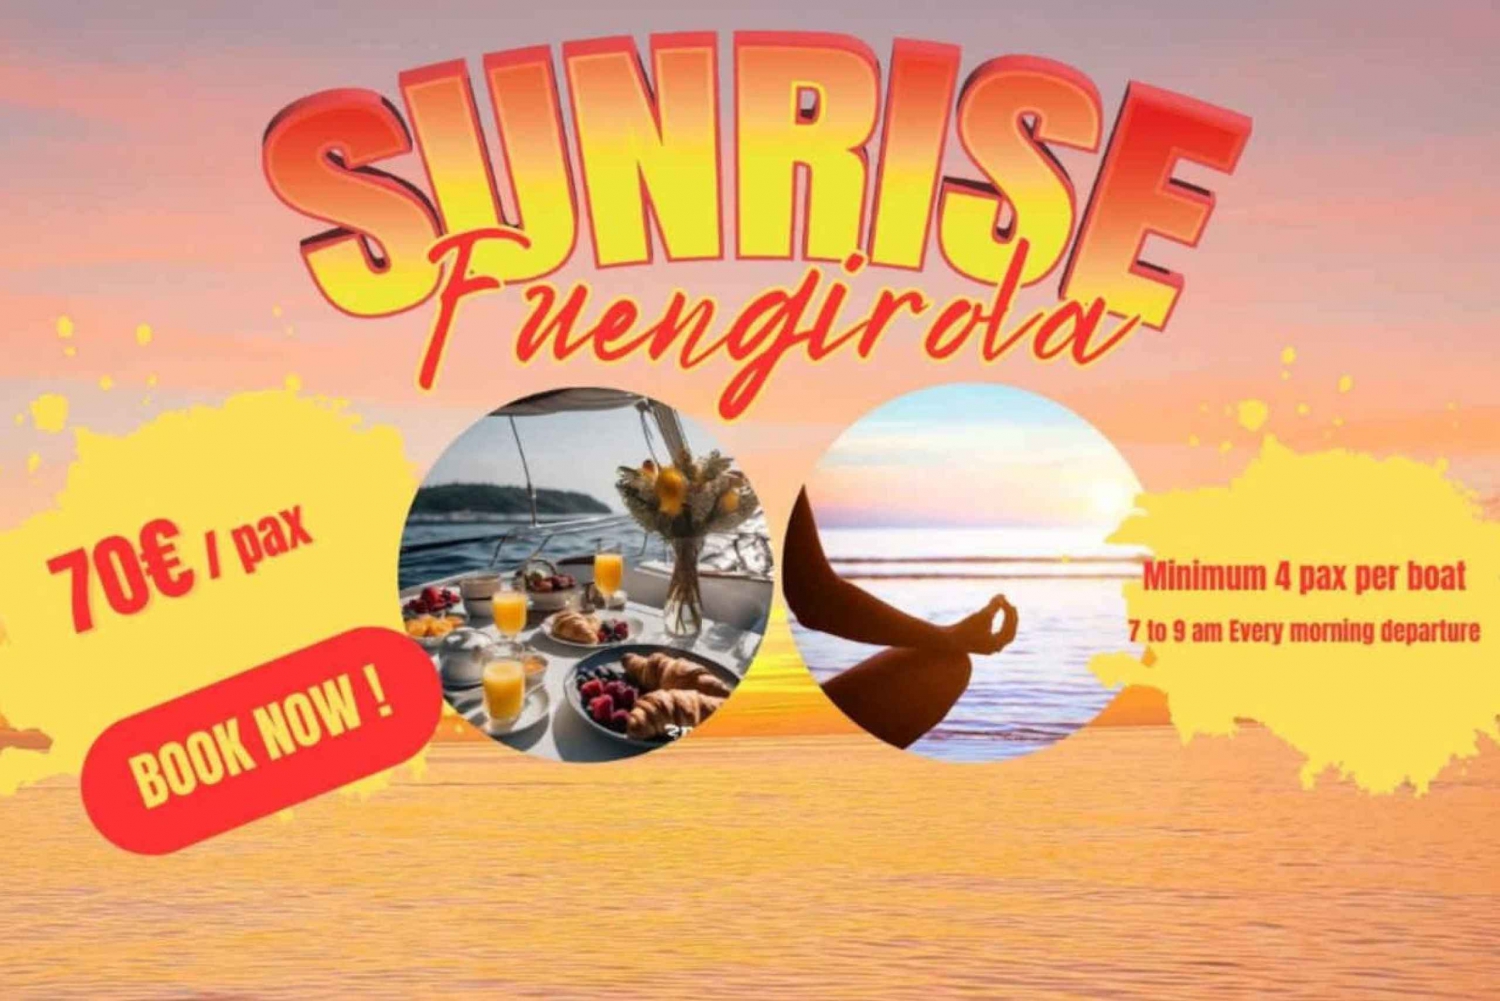 Sunrise Fuengirola